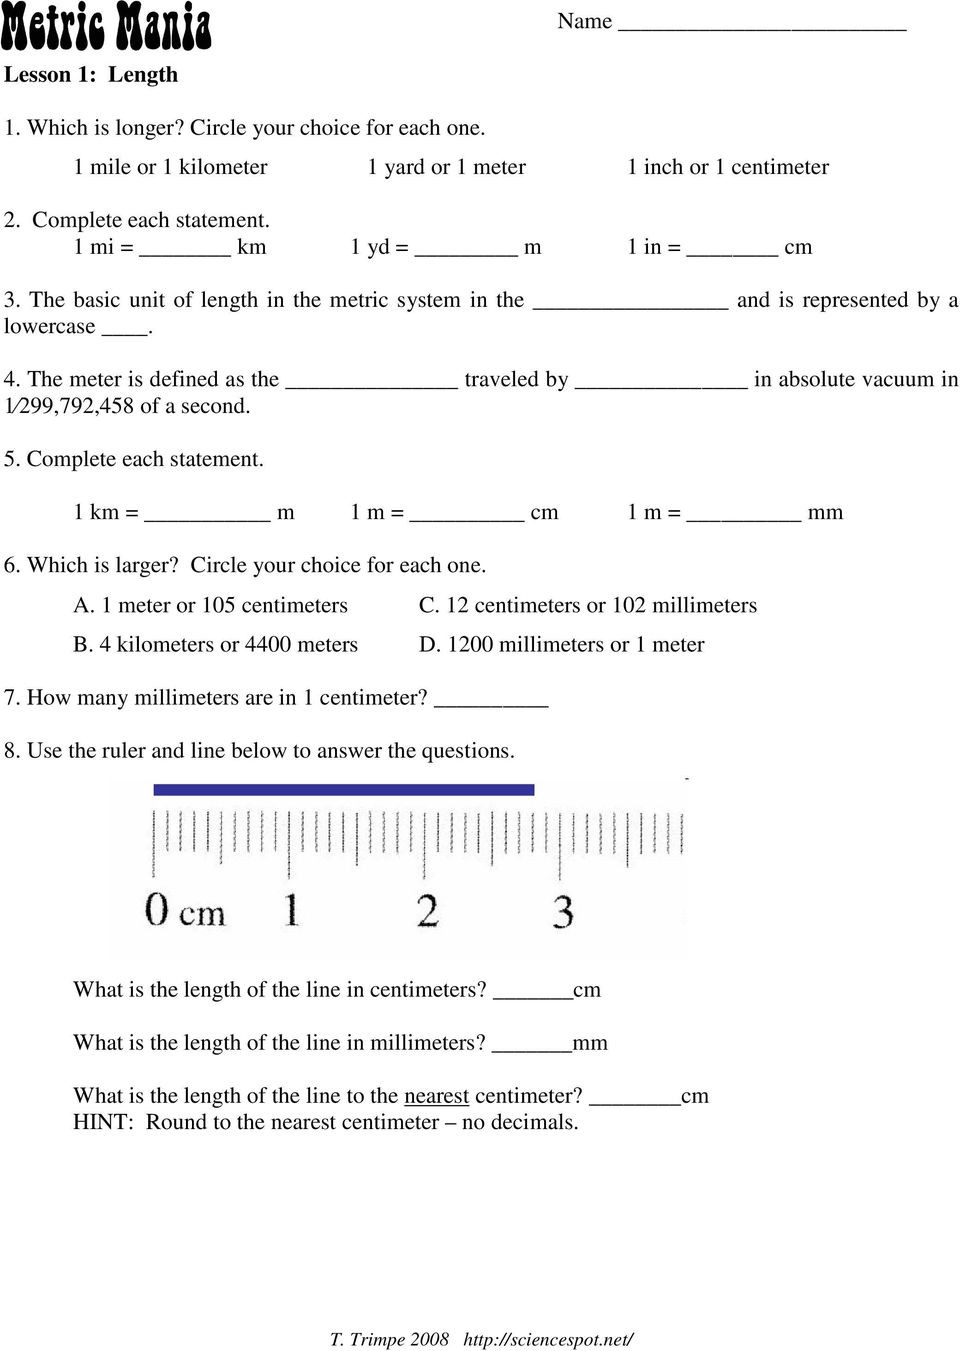 Metric Mania Worksheet Answers Dimensional Analysis Factor Label Method Worksheet Answers